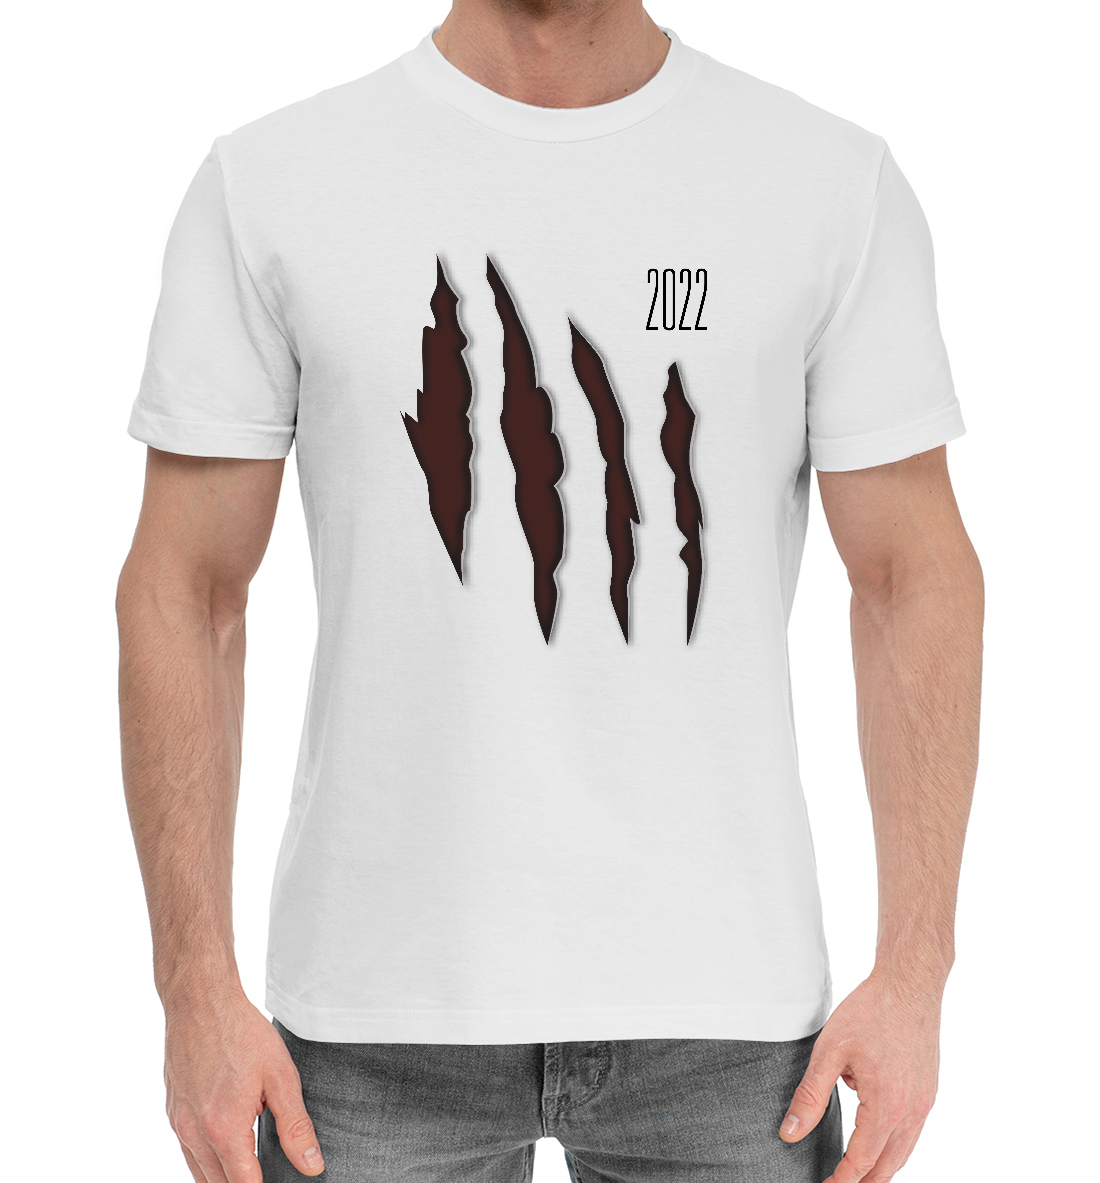 Мужская Хлопковая футболка с принтом Год тигра 2022, артикул N22-710326-hfu-2mp